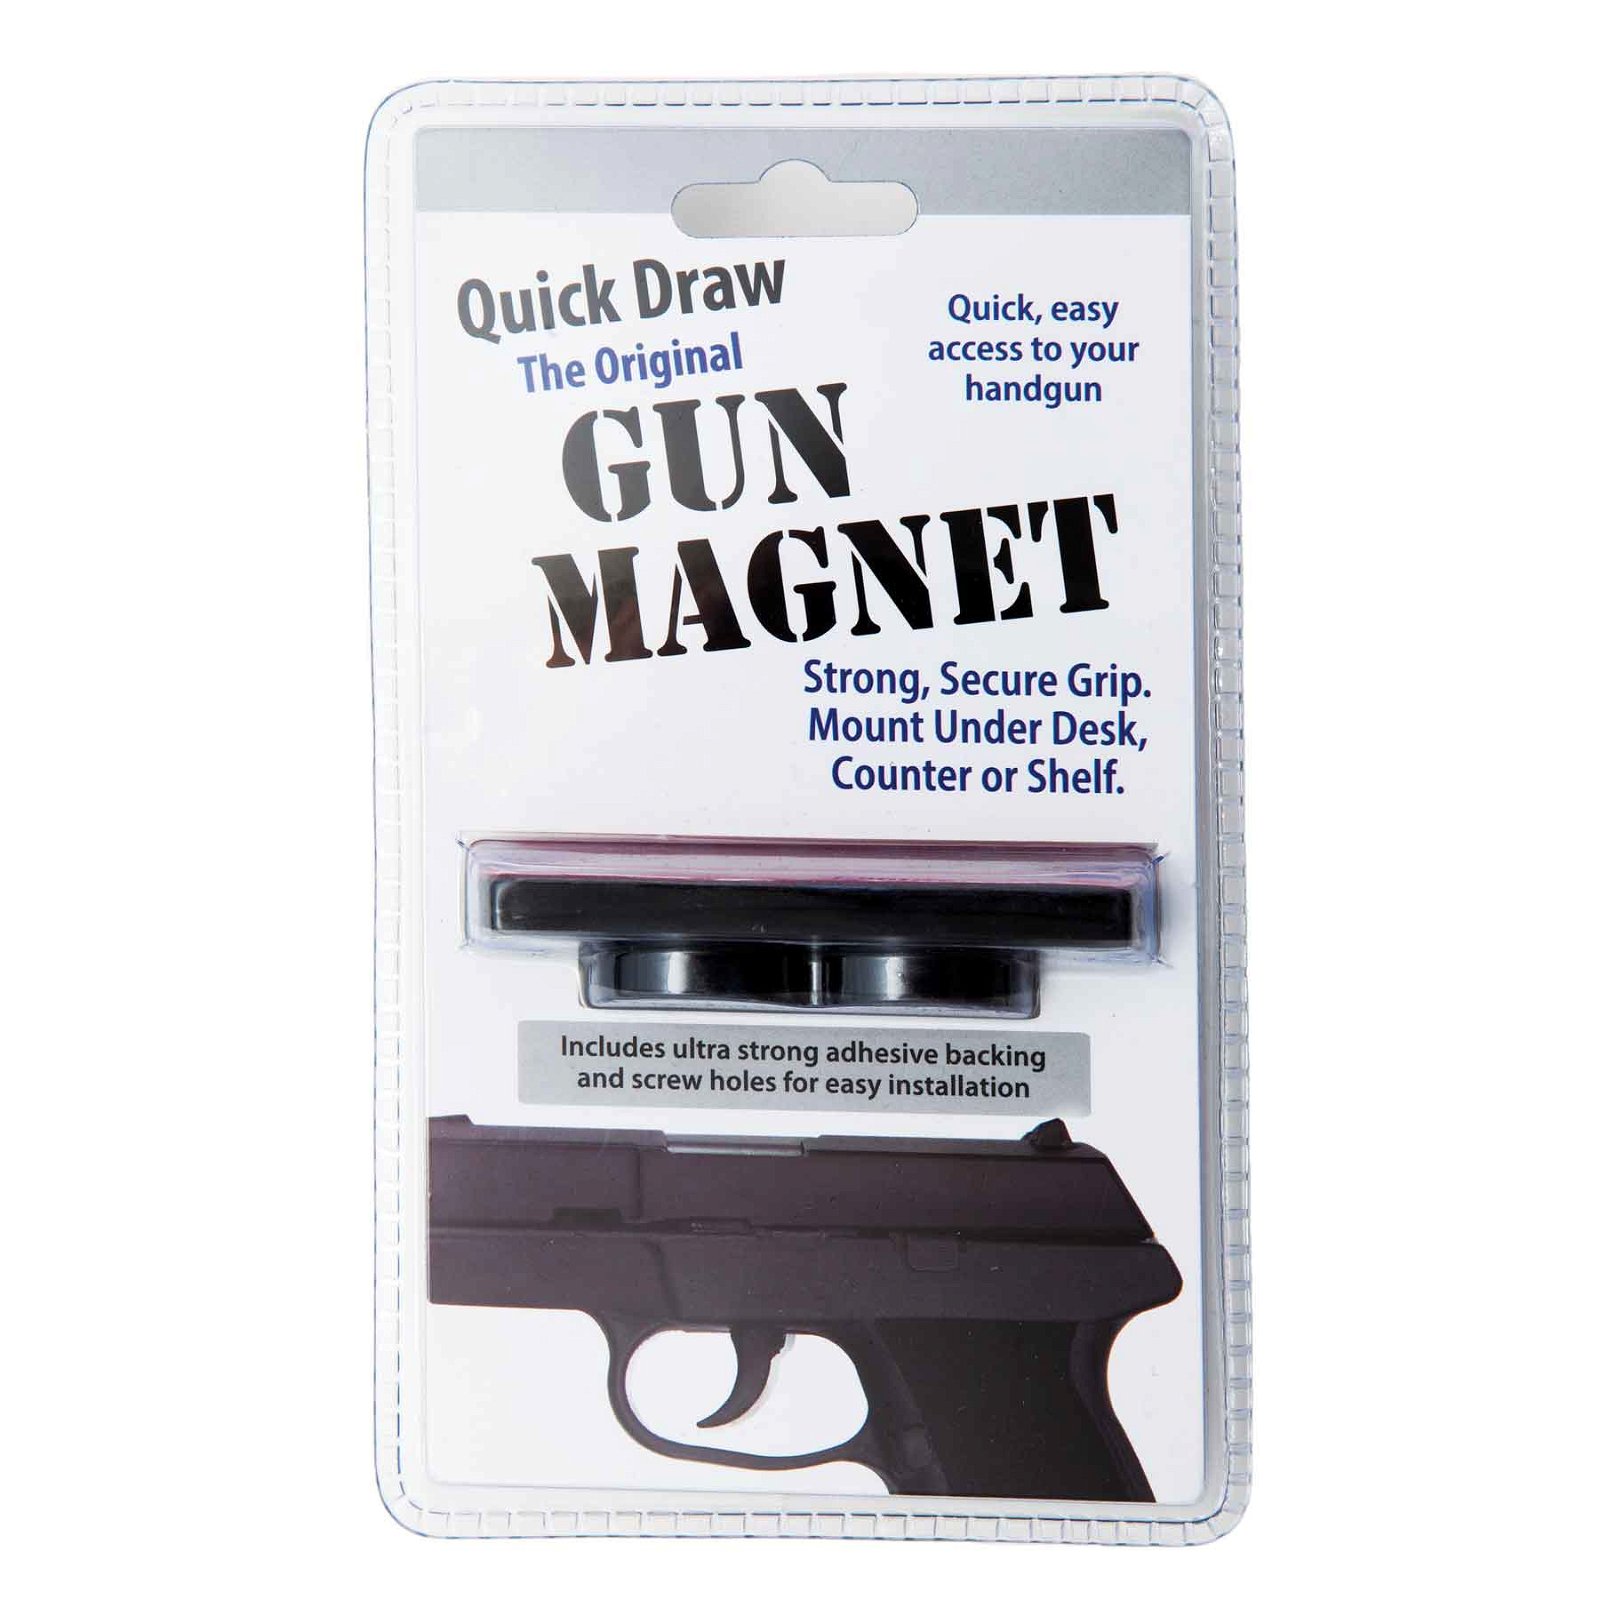 QUICK DRAW GUN MAGNET